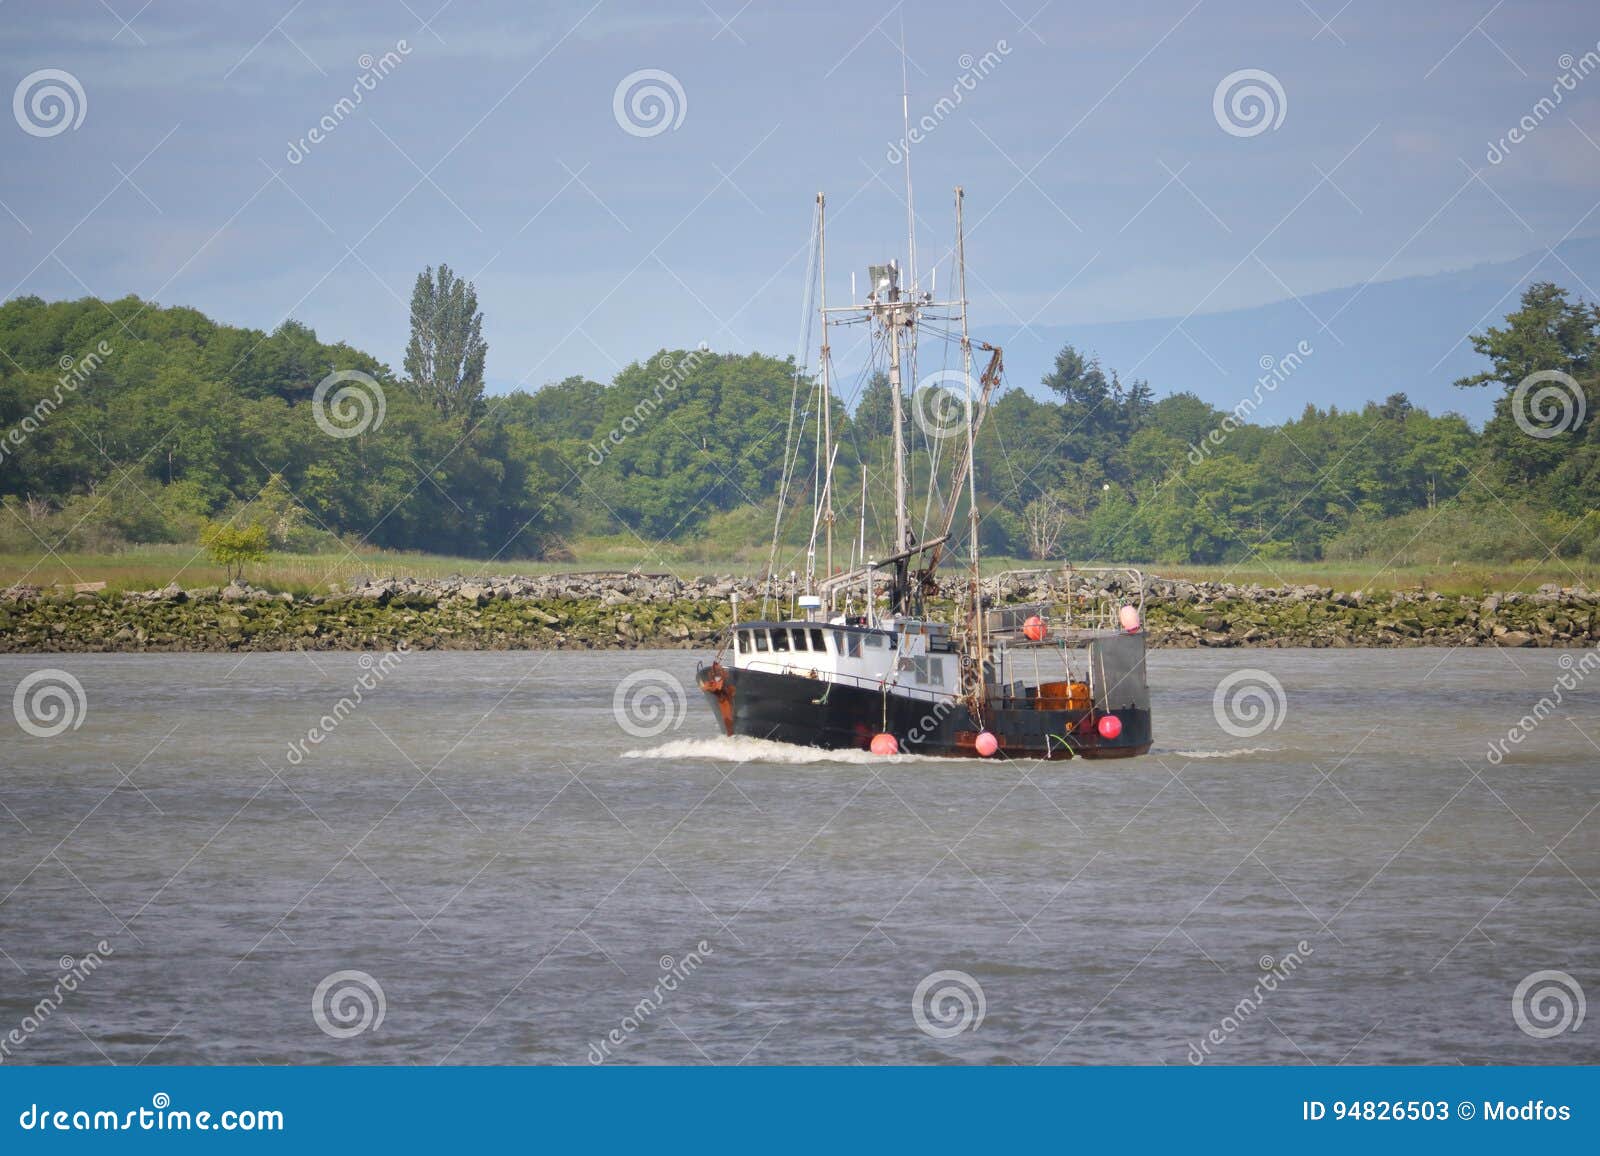 Crab Fishing Boat Returning Home Stock Image - Image of coast, crab:  94826503